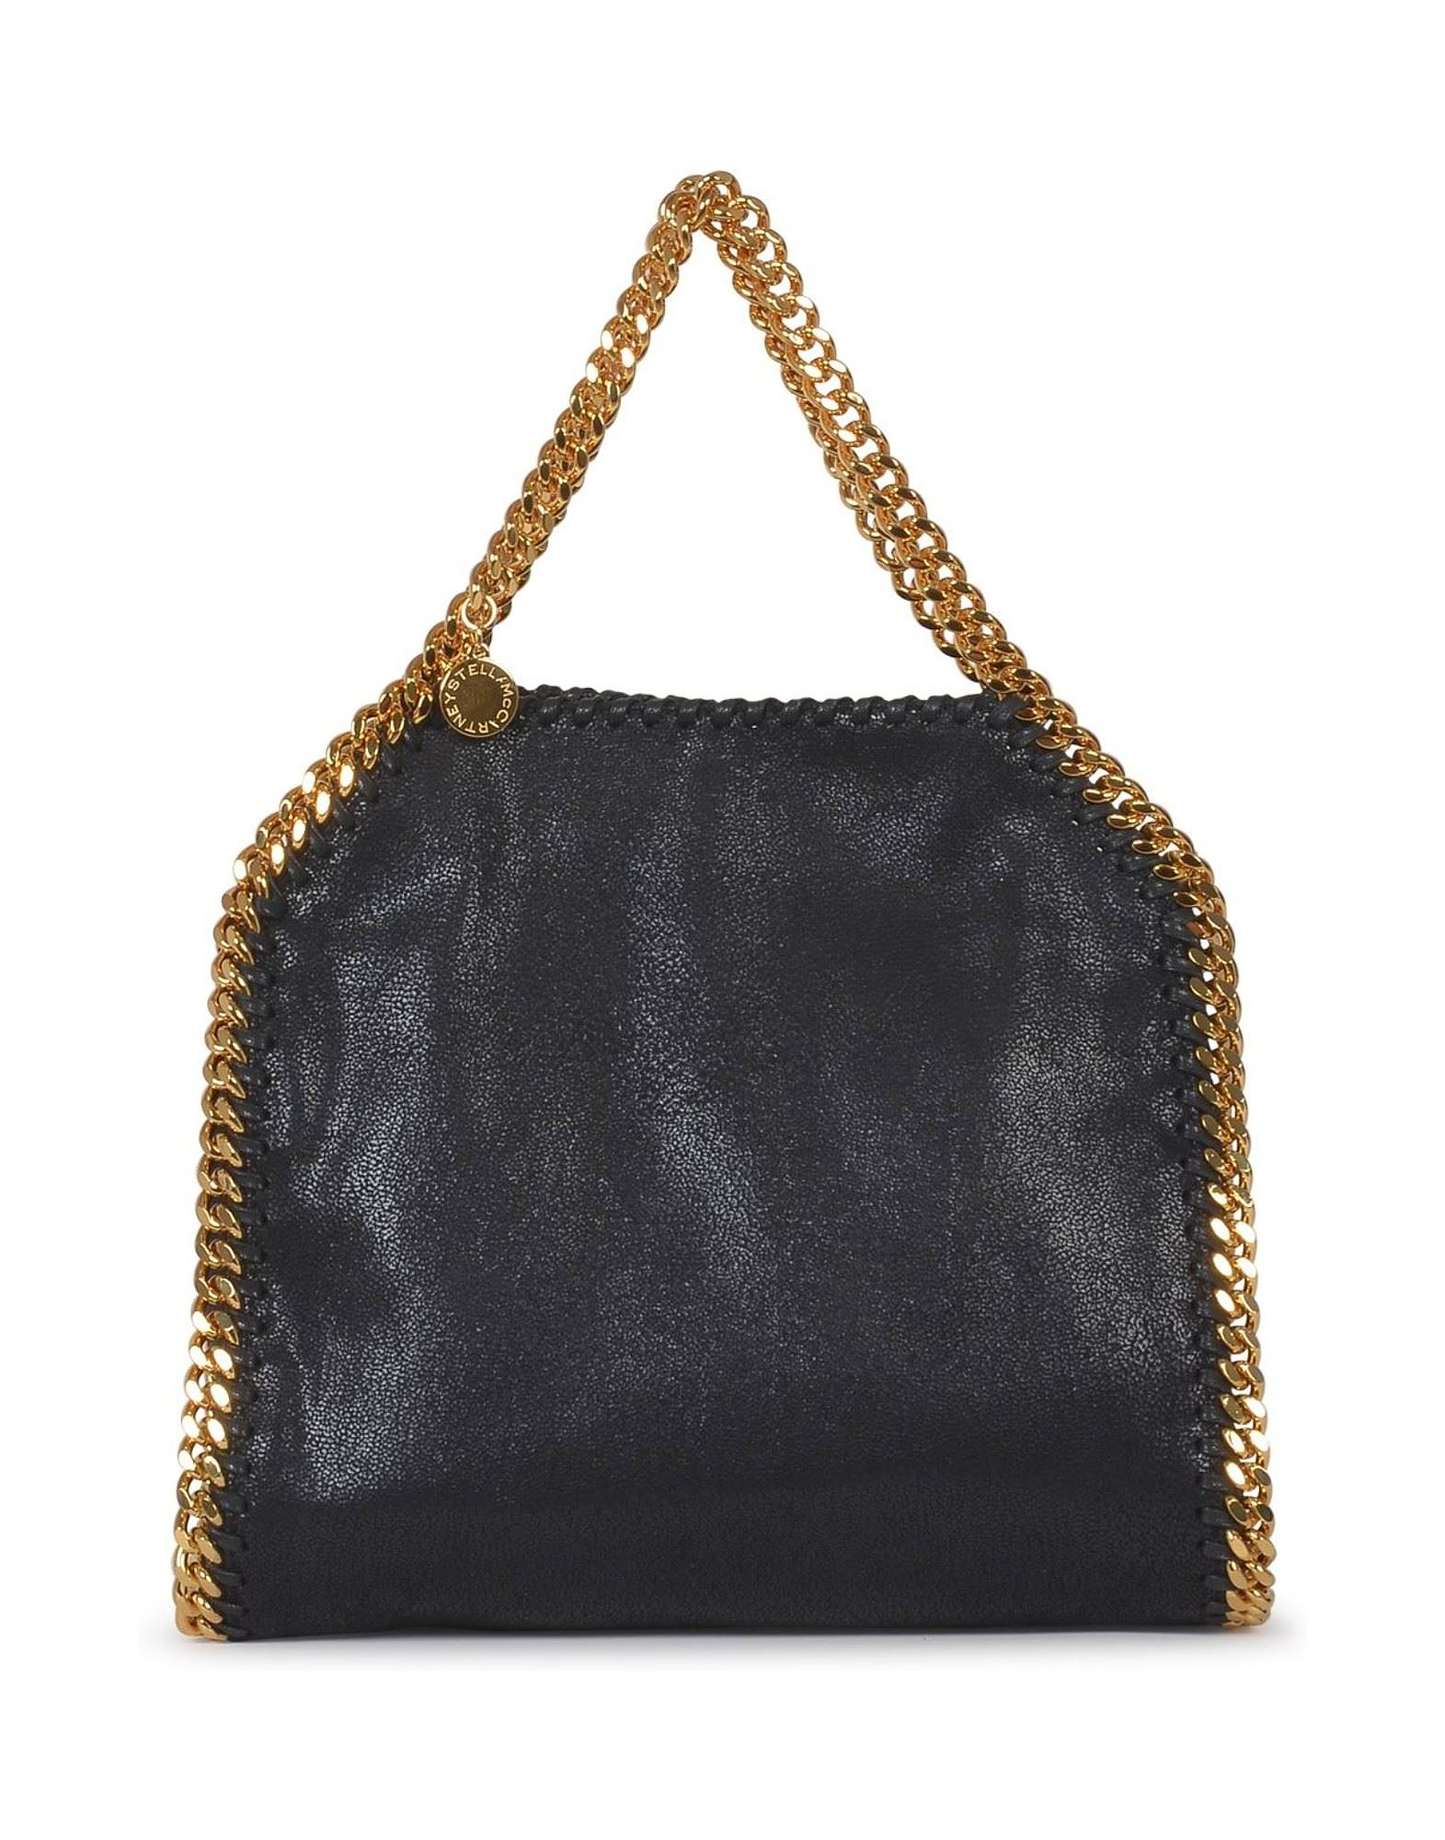 PARIOLI BAGS - STELLA McCARTNEY Signature  Falabella Handbags  - Black